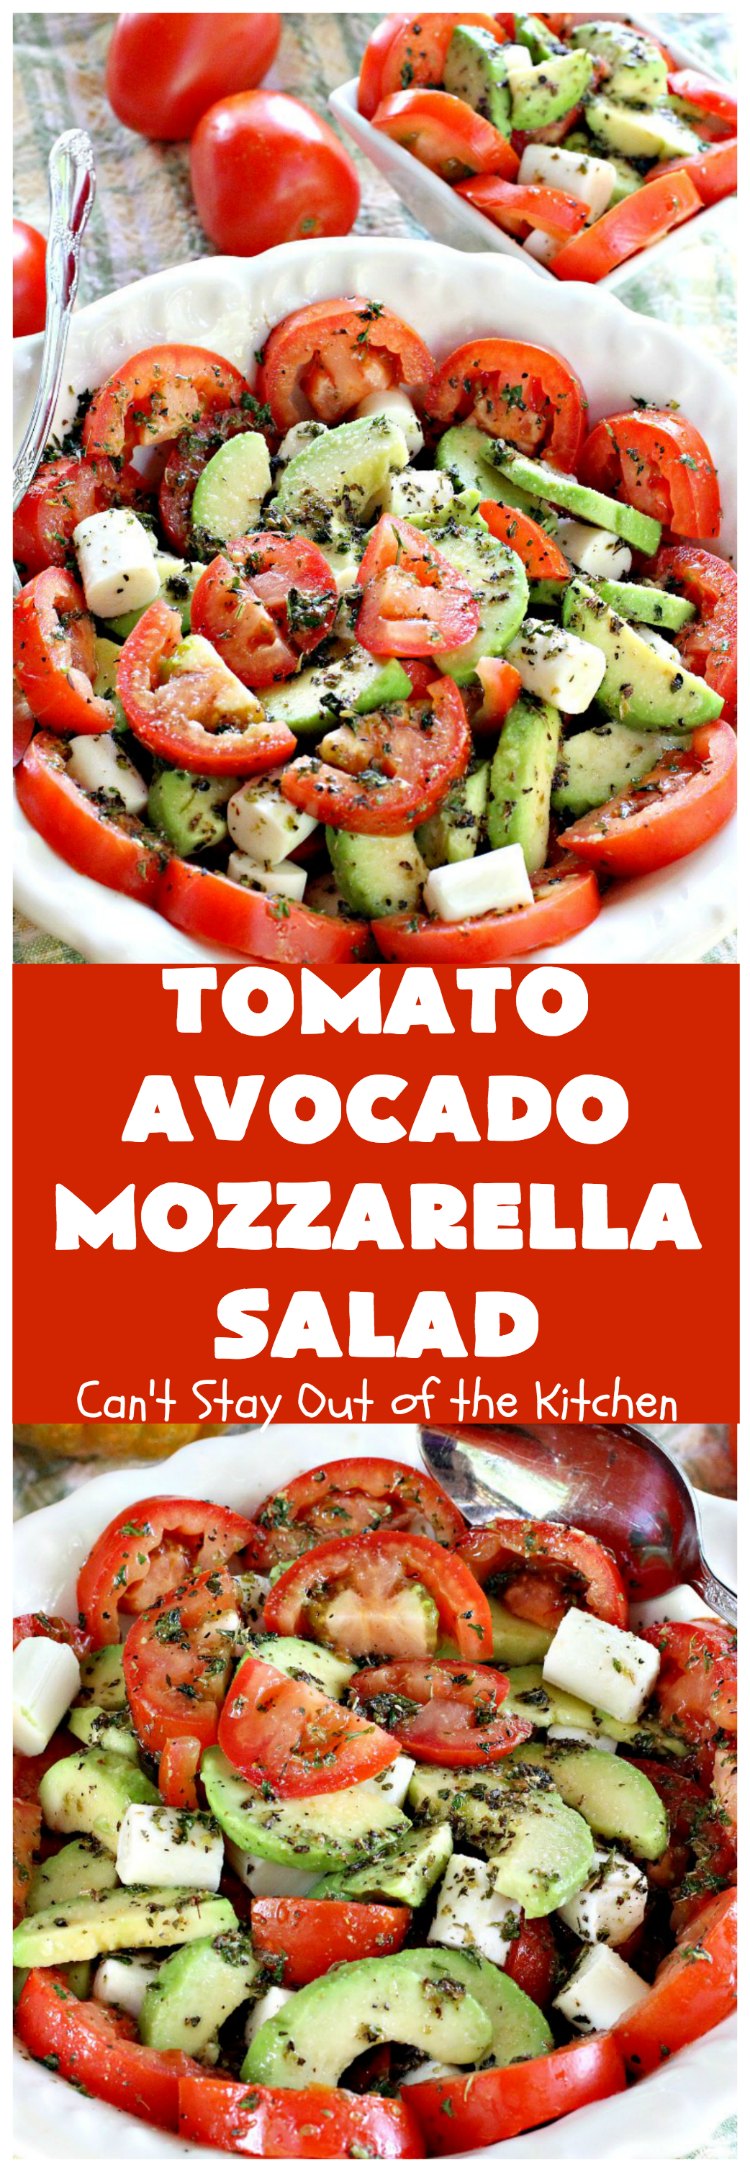 Tomato Avocado Mozzarella Salad | Can't Stay Out of the Kitchen